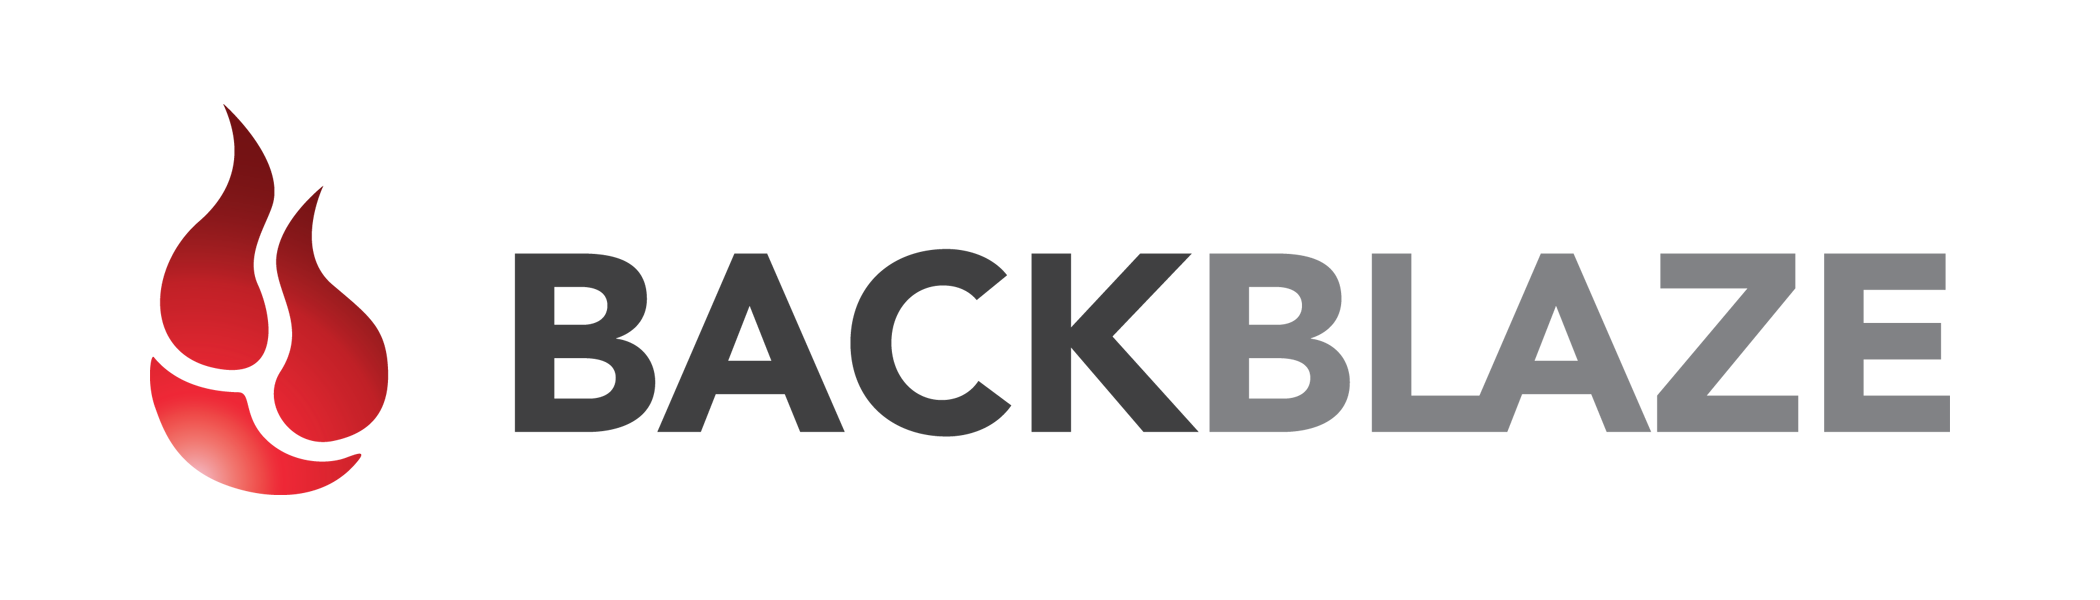 backblaze-big.png